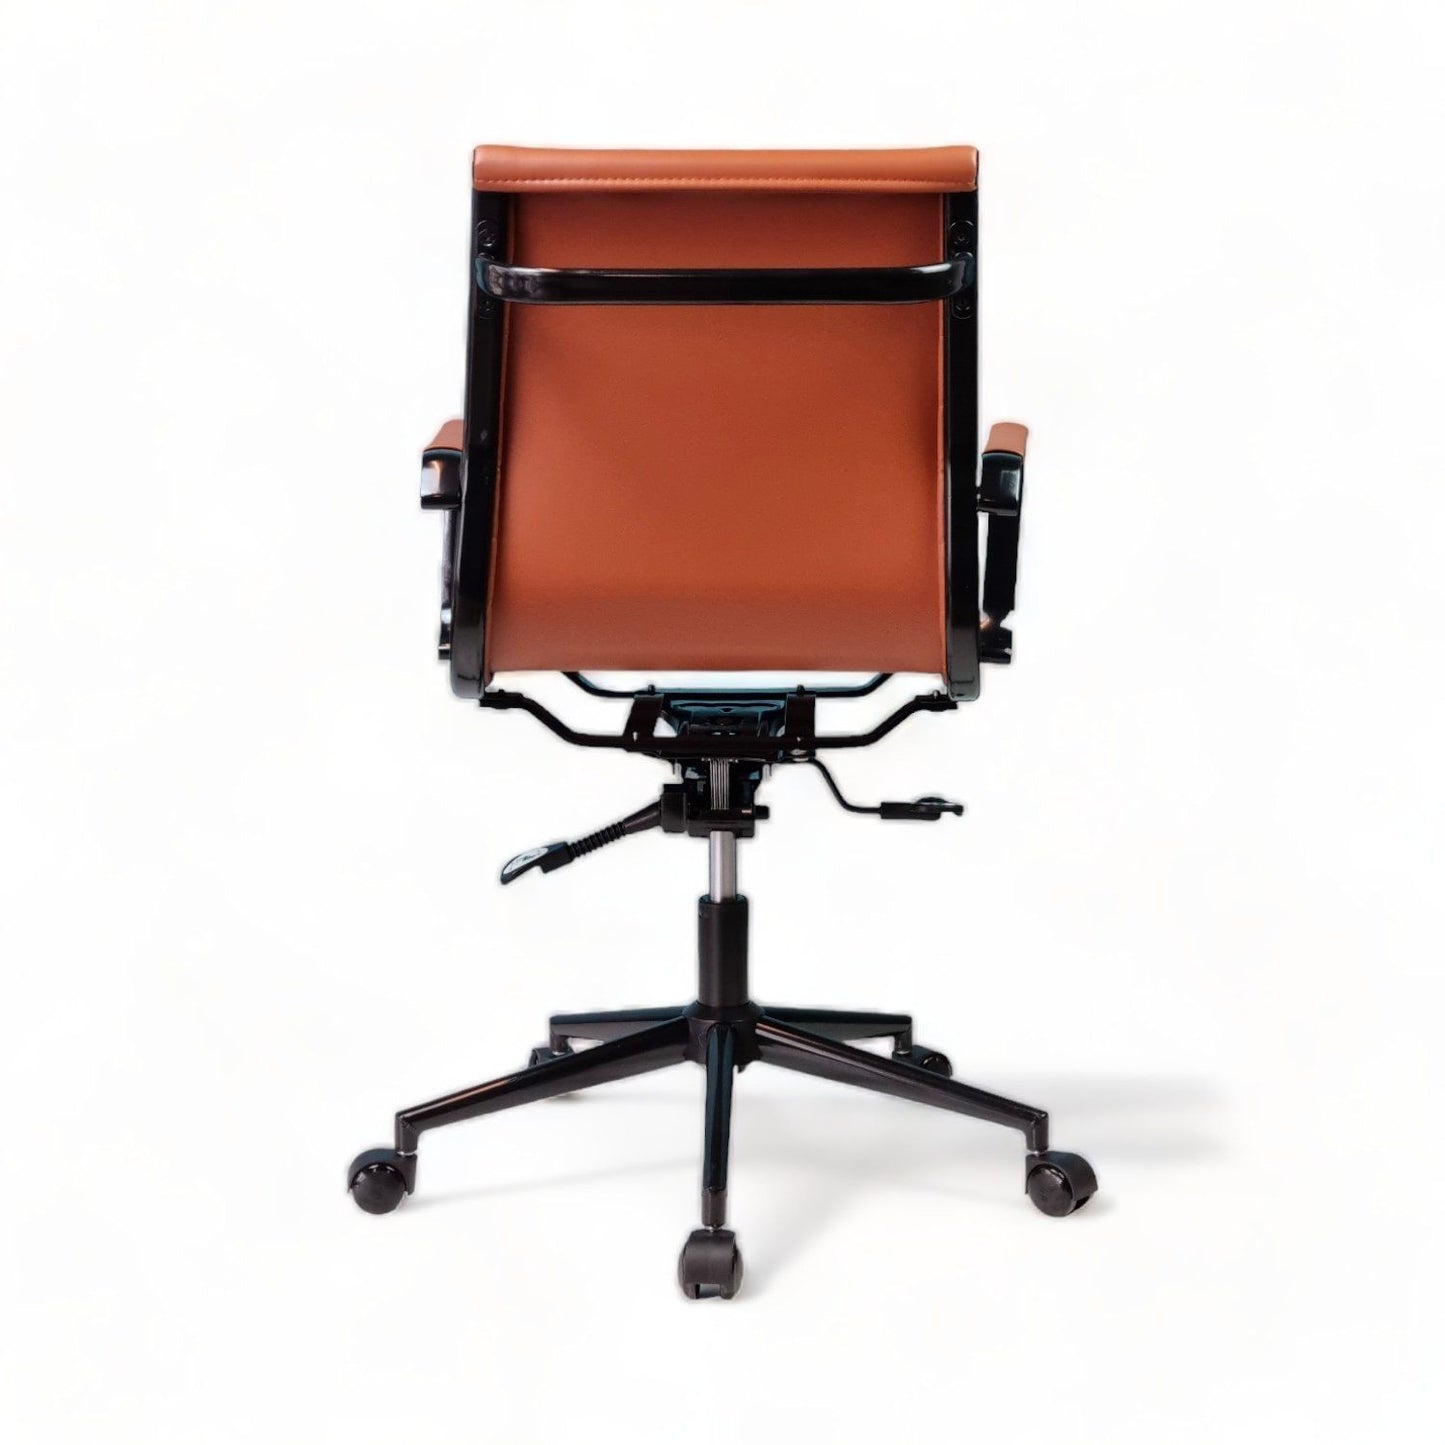 Bety Work - Tan - Office Chair